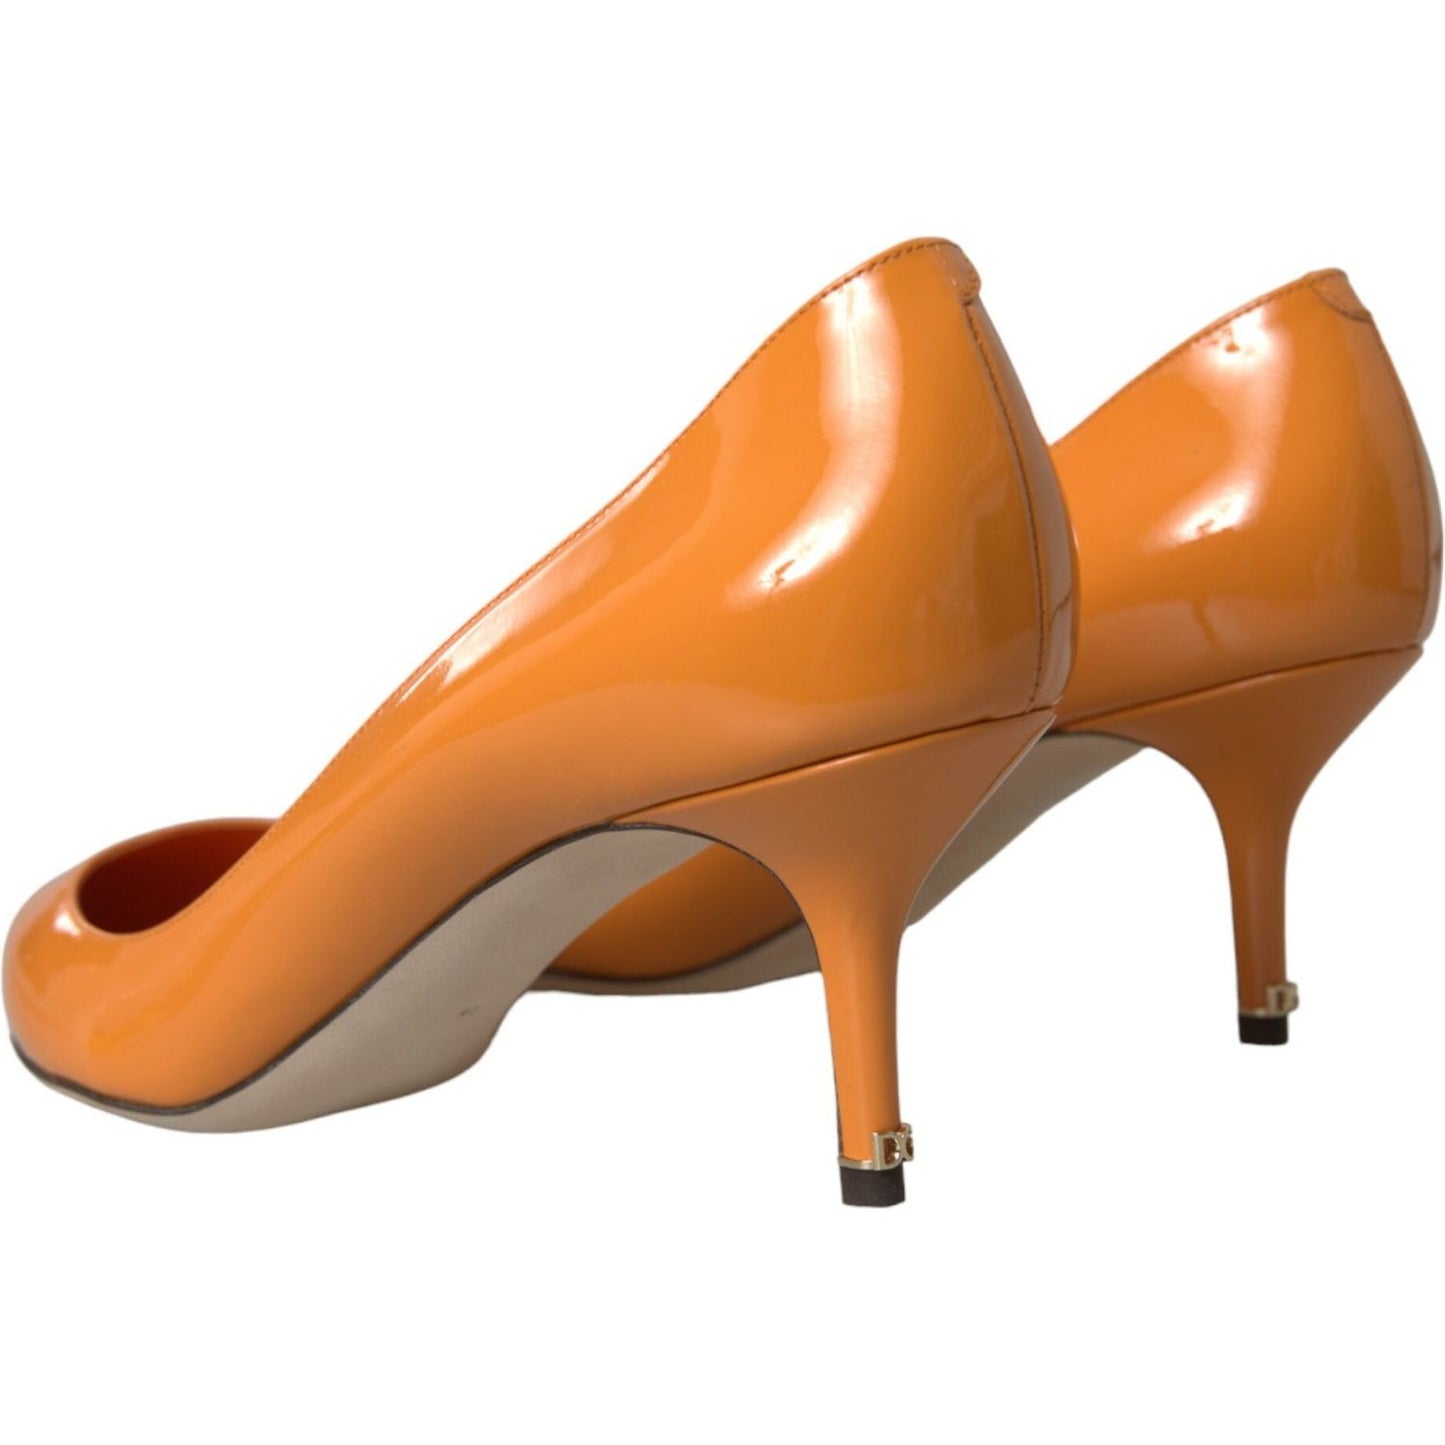 Dolce & Gabbana Orange Patent Leather Heels Pumps Shoes orange-patent-leather-heels-pumps-shoes